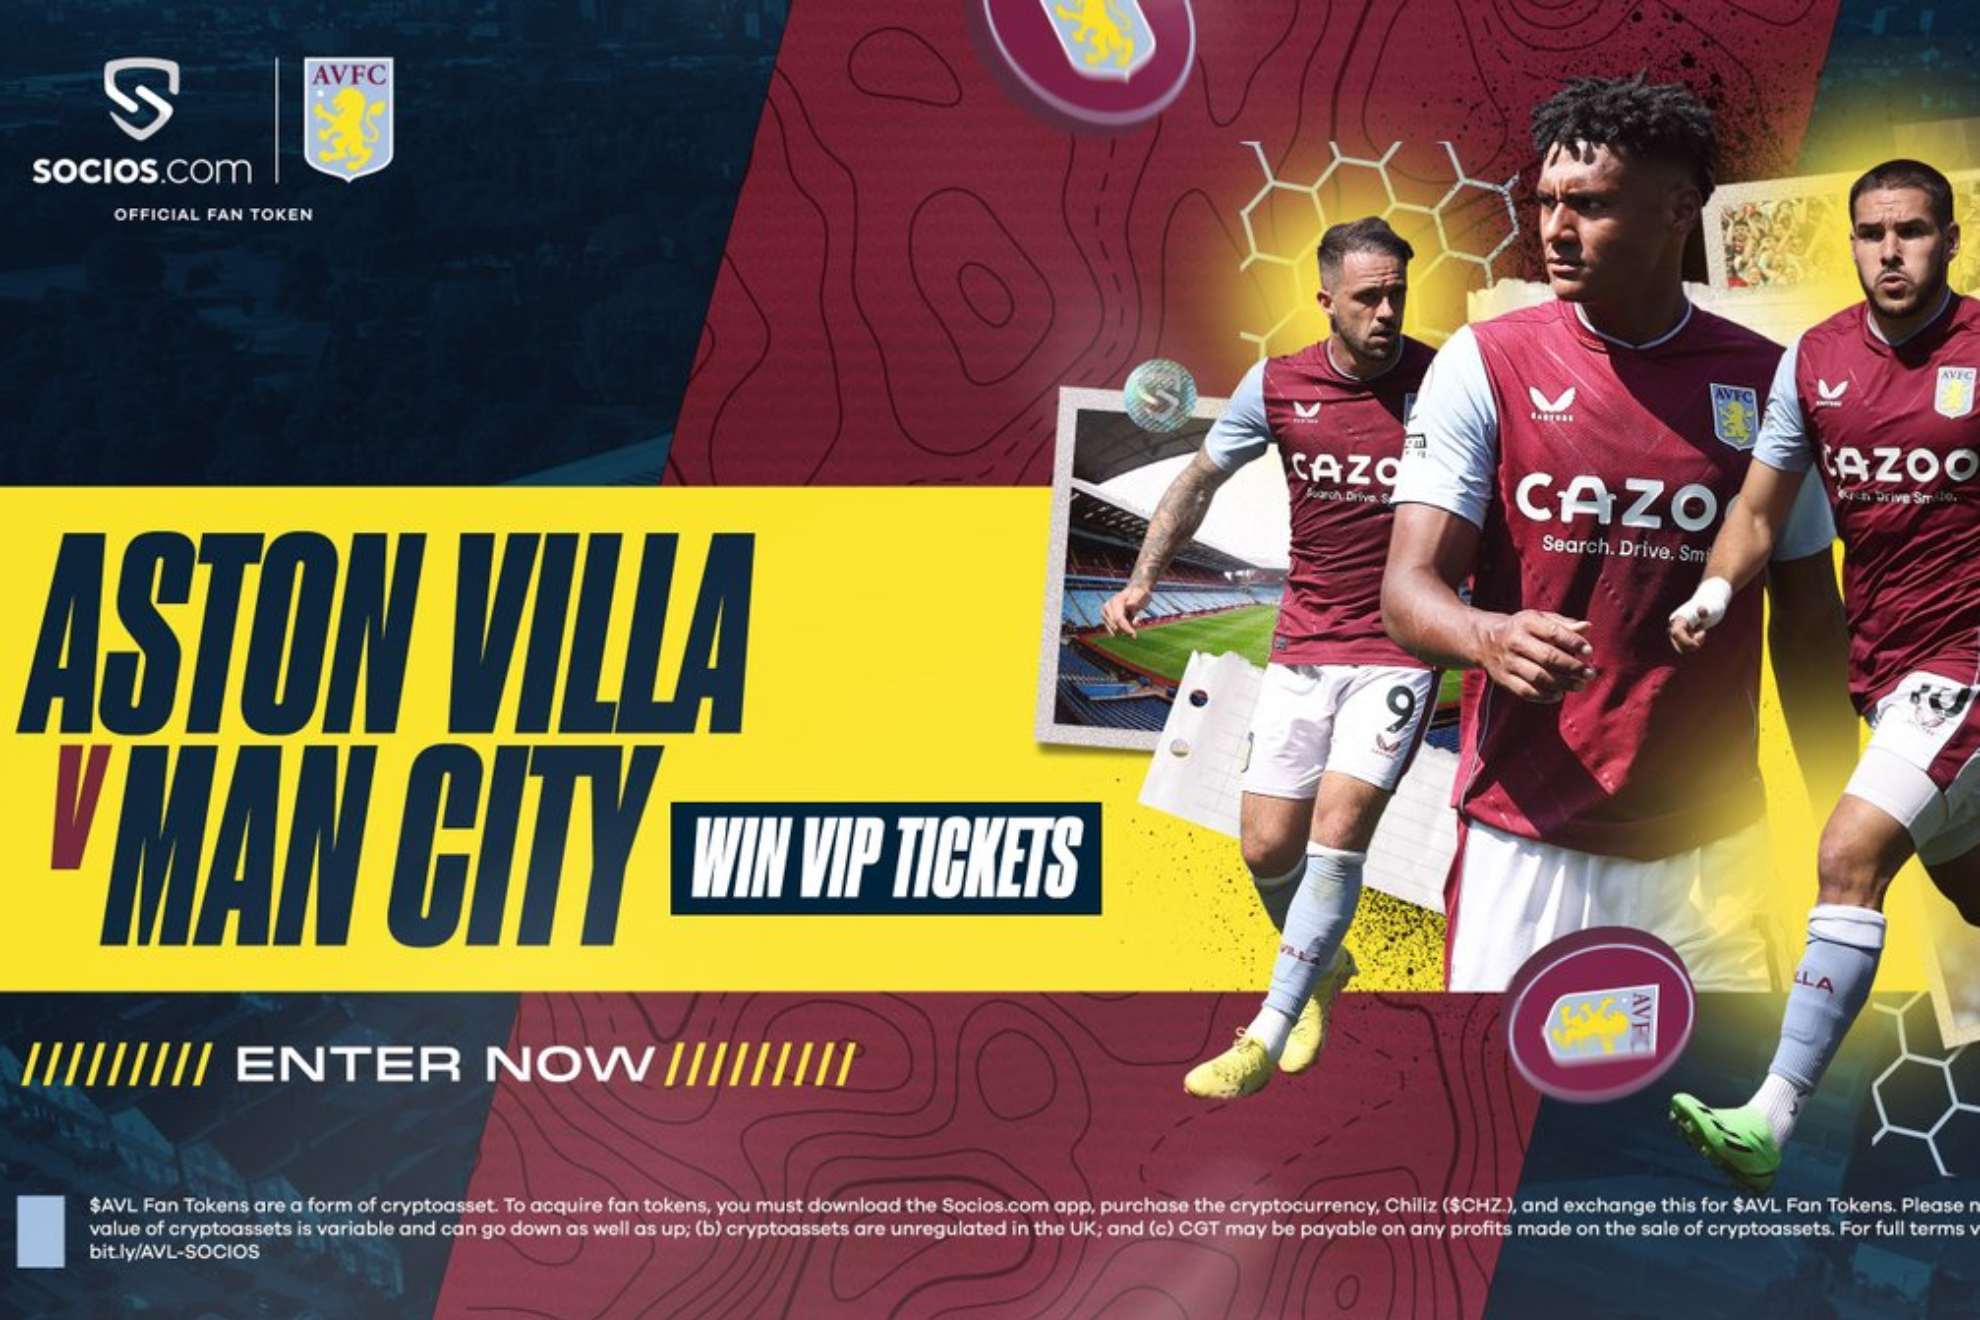 Win a VIP ticket for Aston Villa vs Manchester City with Socios